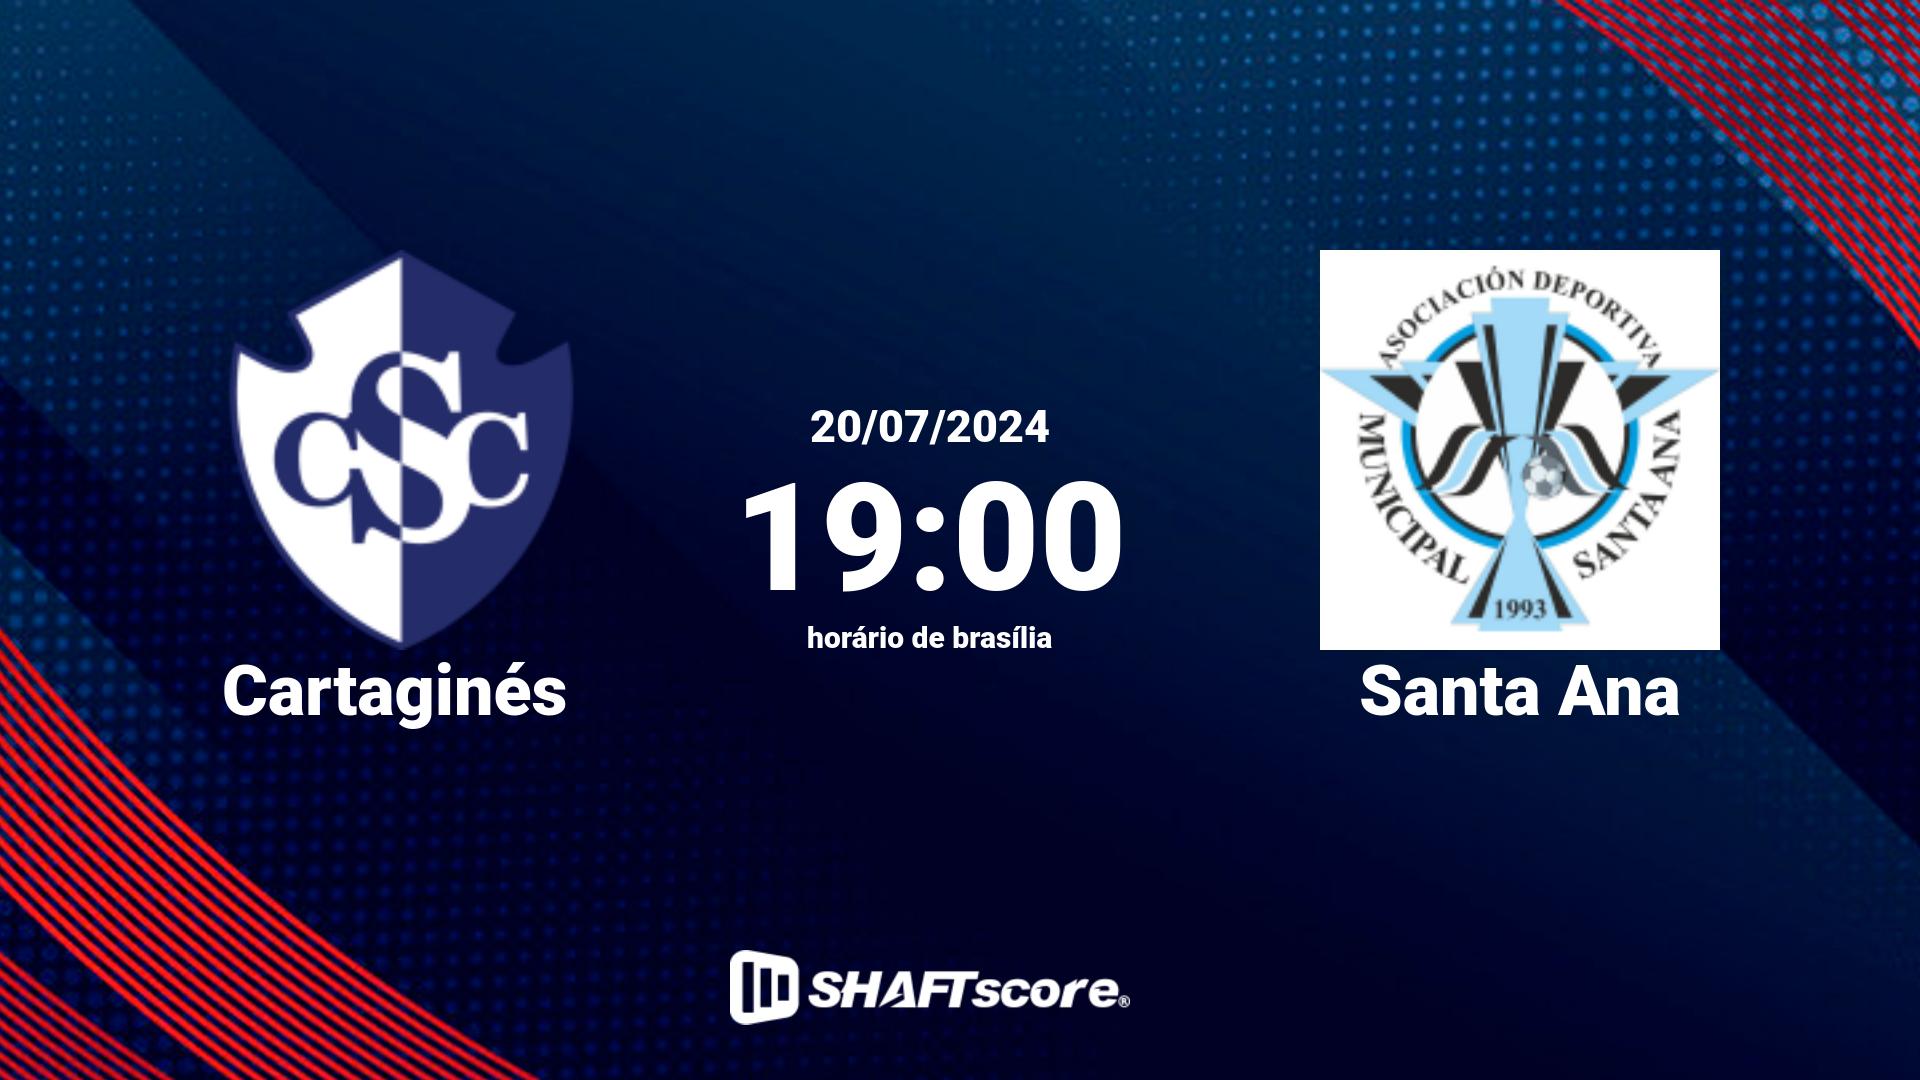 Estatísticas do jogo Cartaginés vs Santa Ana 20.07 19:00